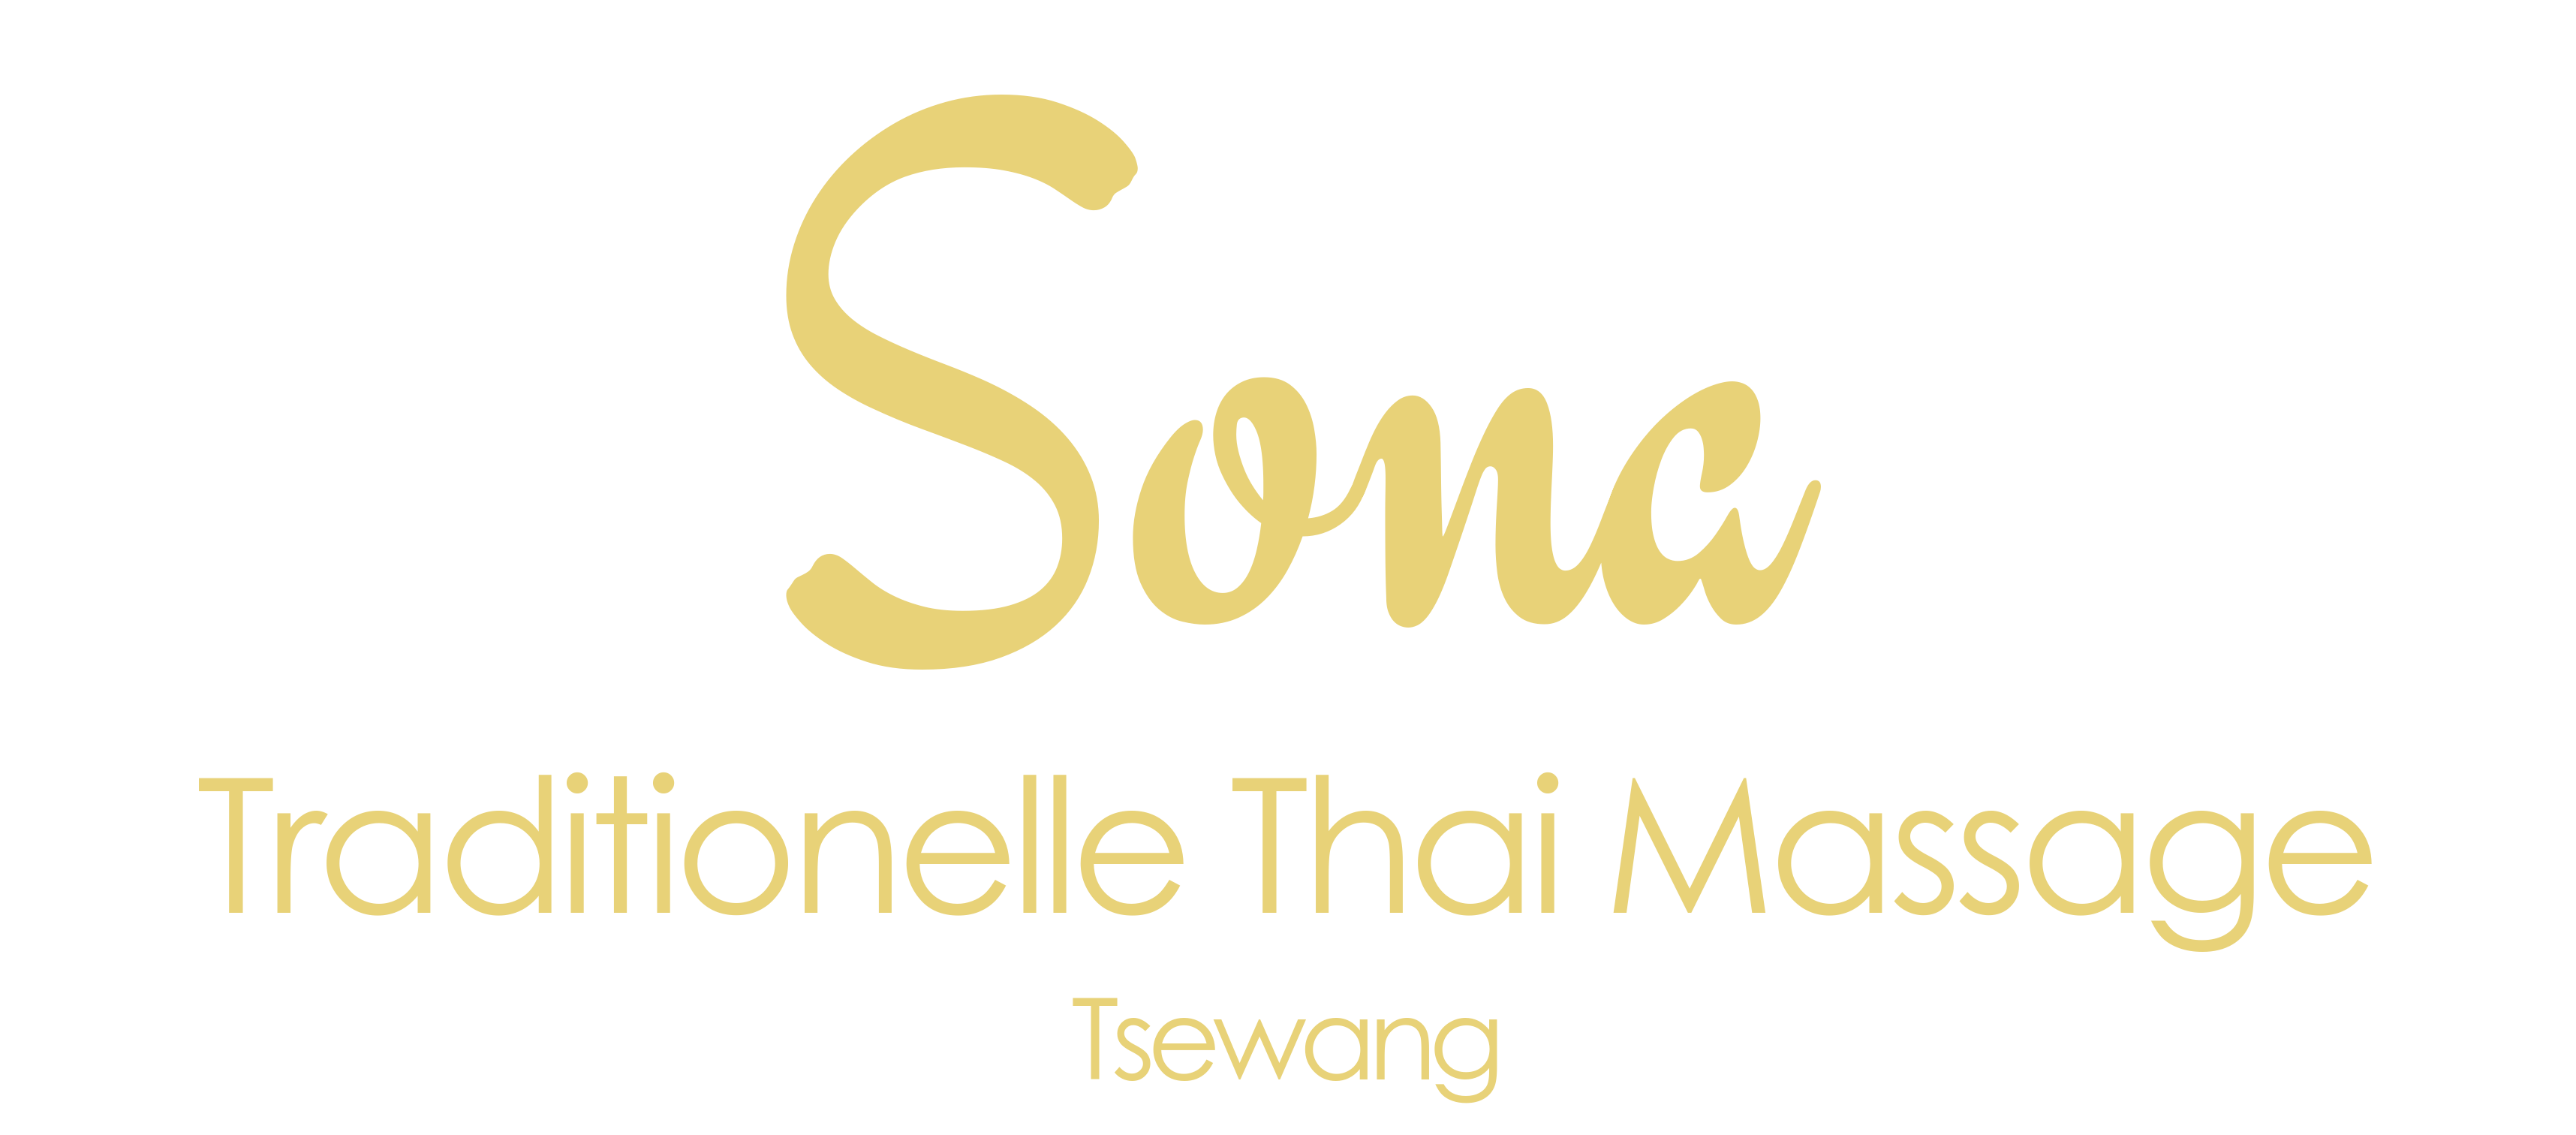 Sona - Traditionelle Thai Massage Tsewang